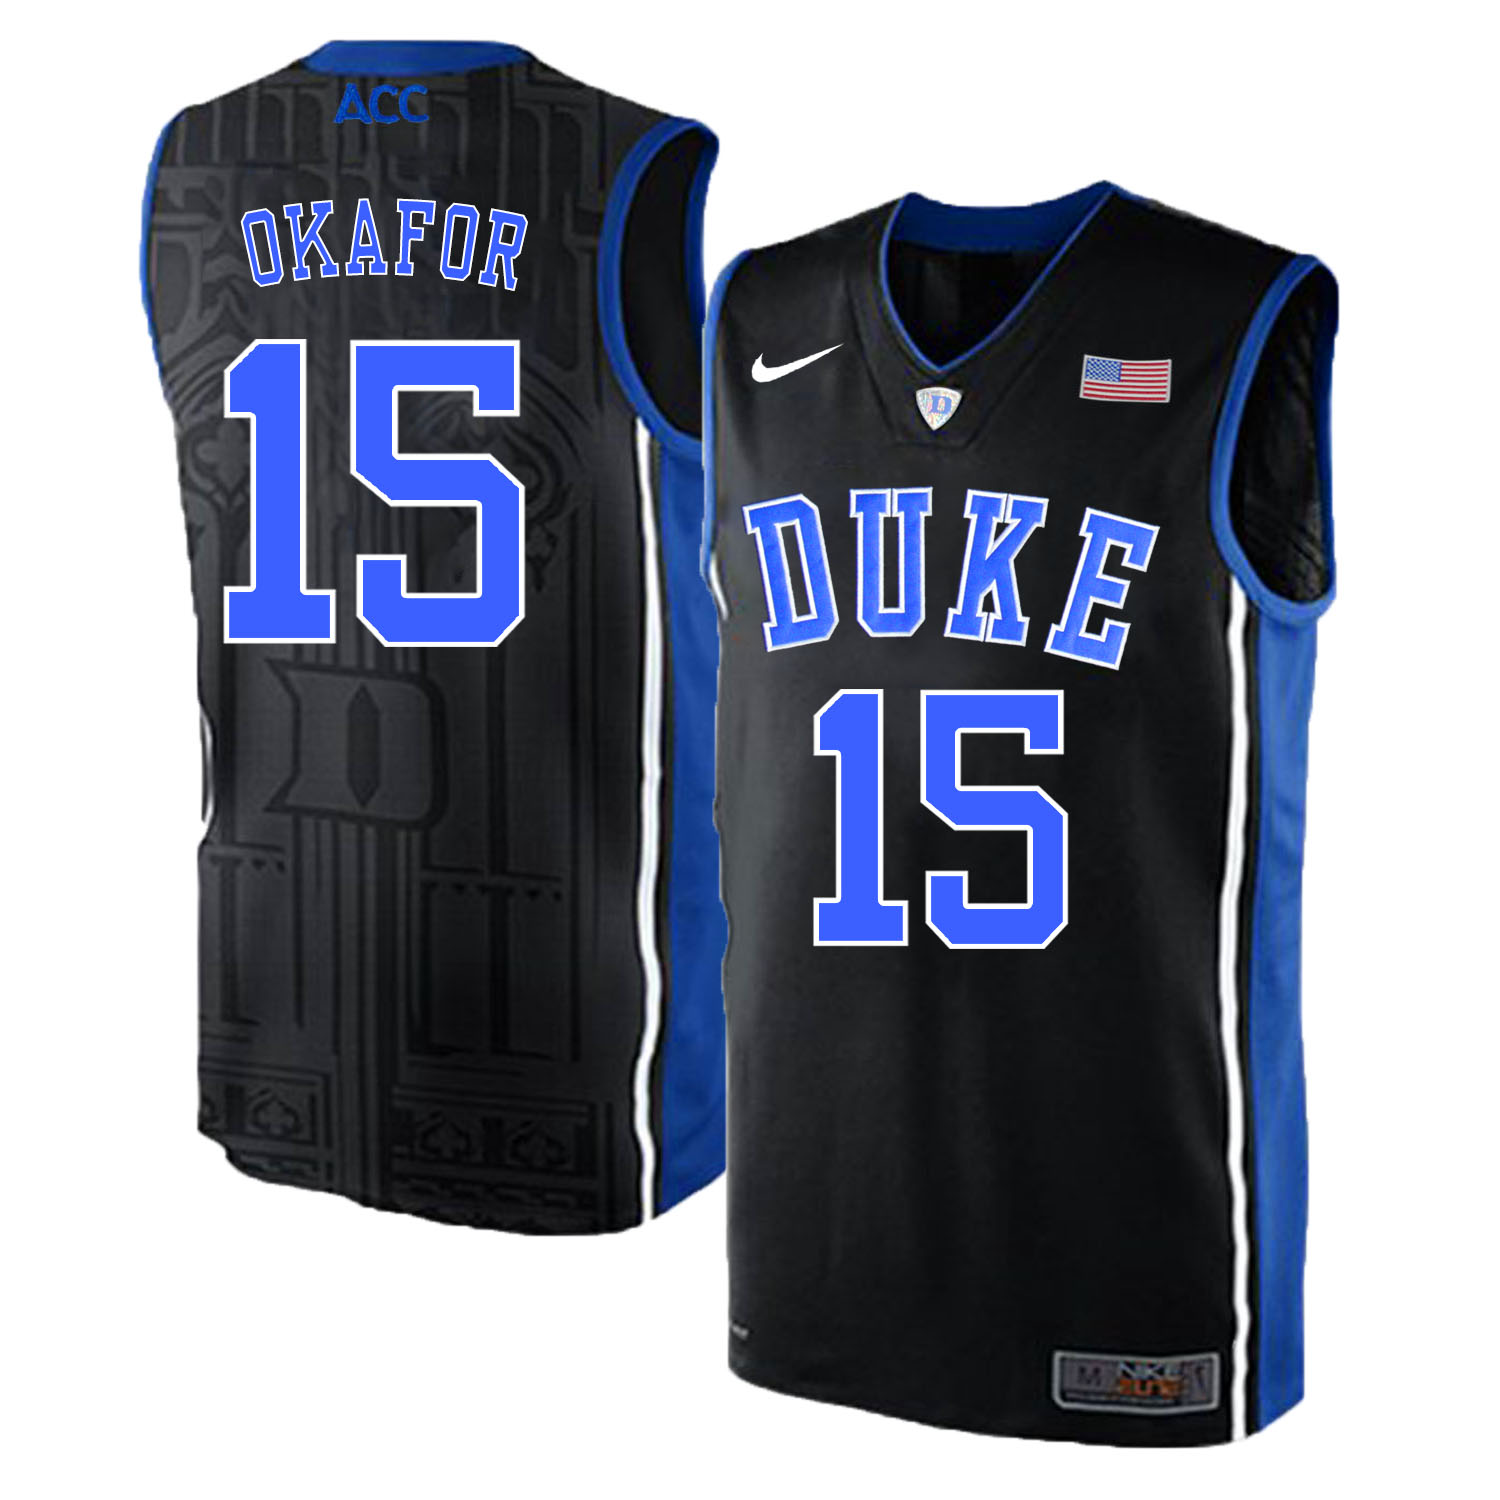 Duke Blue Devils 15 Jahlil Okafor Black Elite College Basketball Jersey